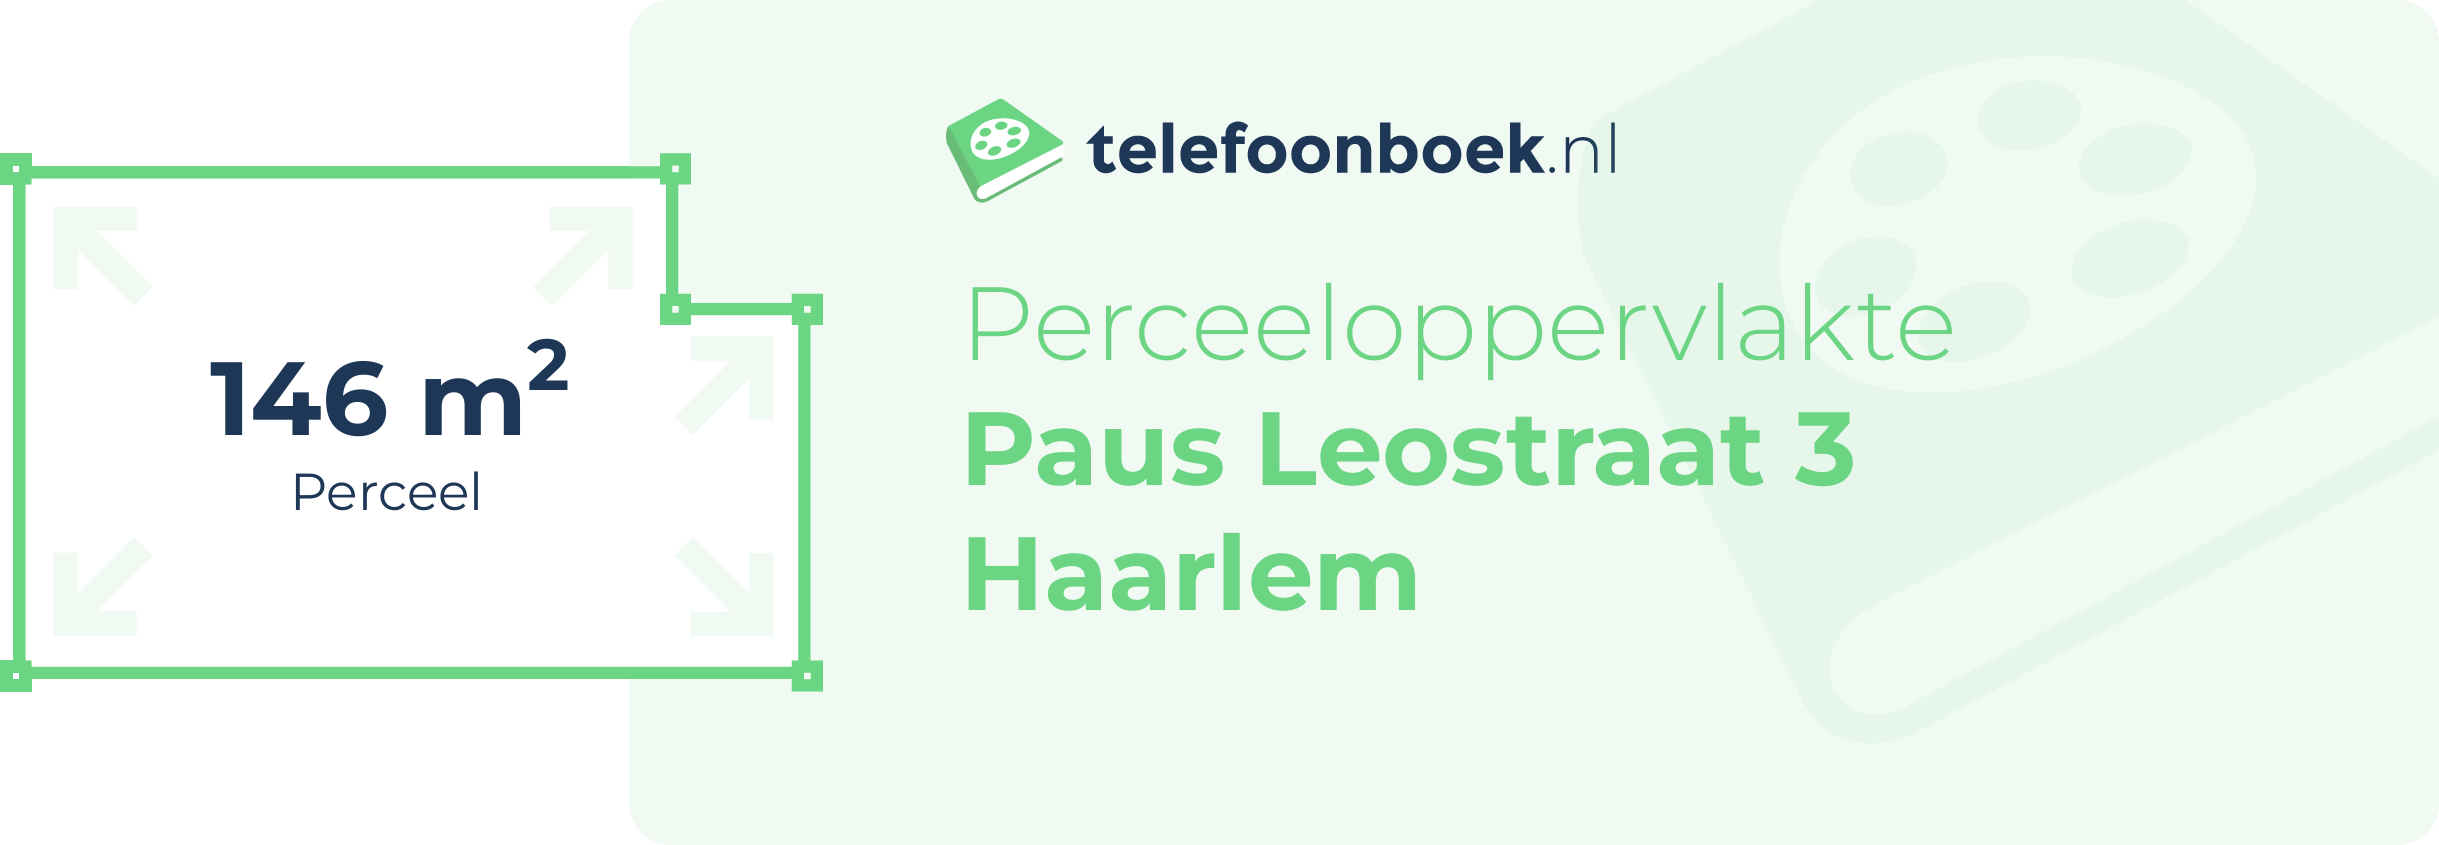 Perceeloppervlakte Paus Leostraat 3 Haarlem